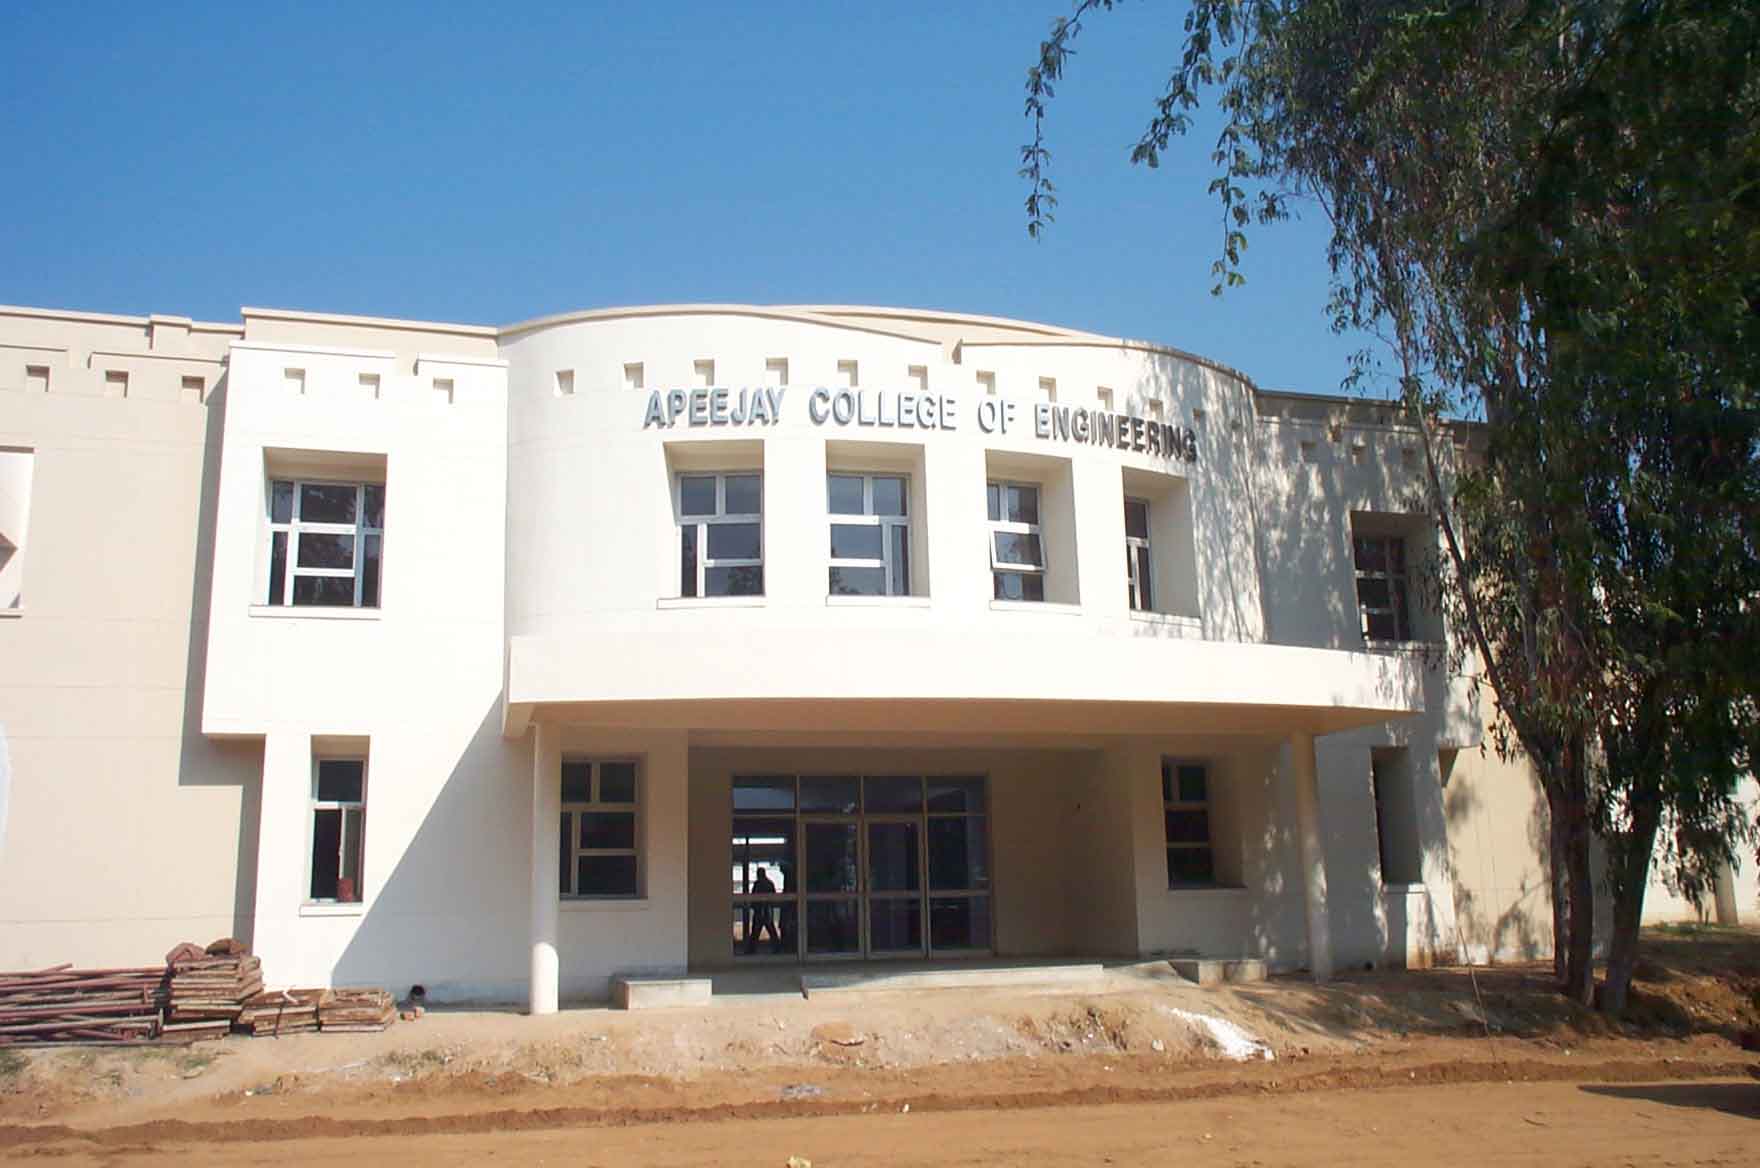 Apeejay College of Engineering